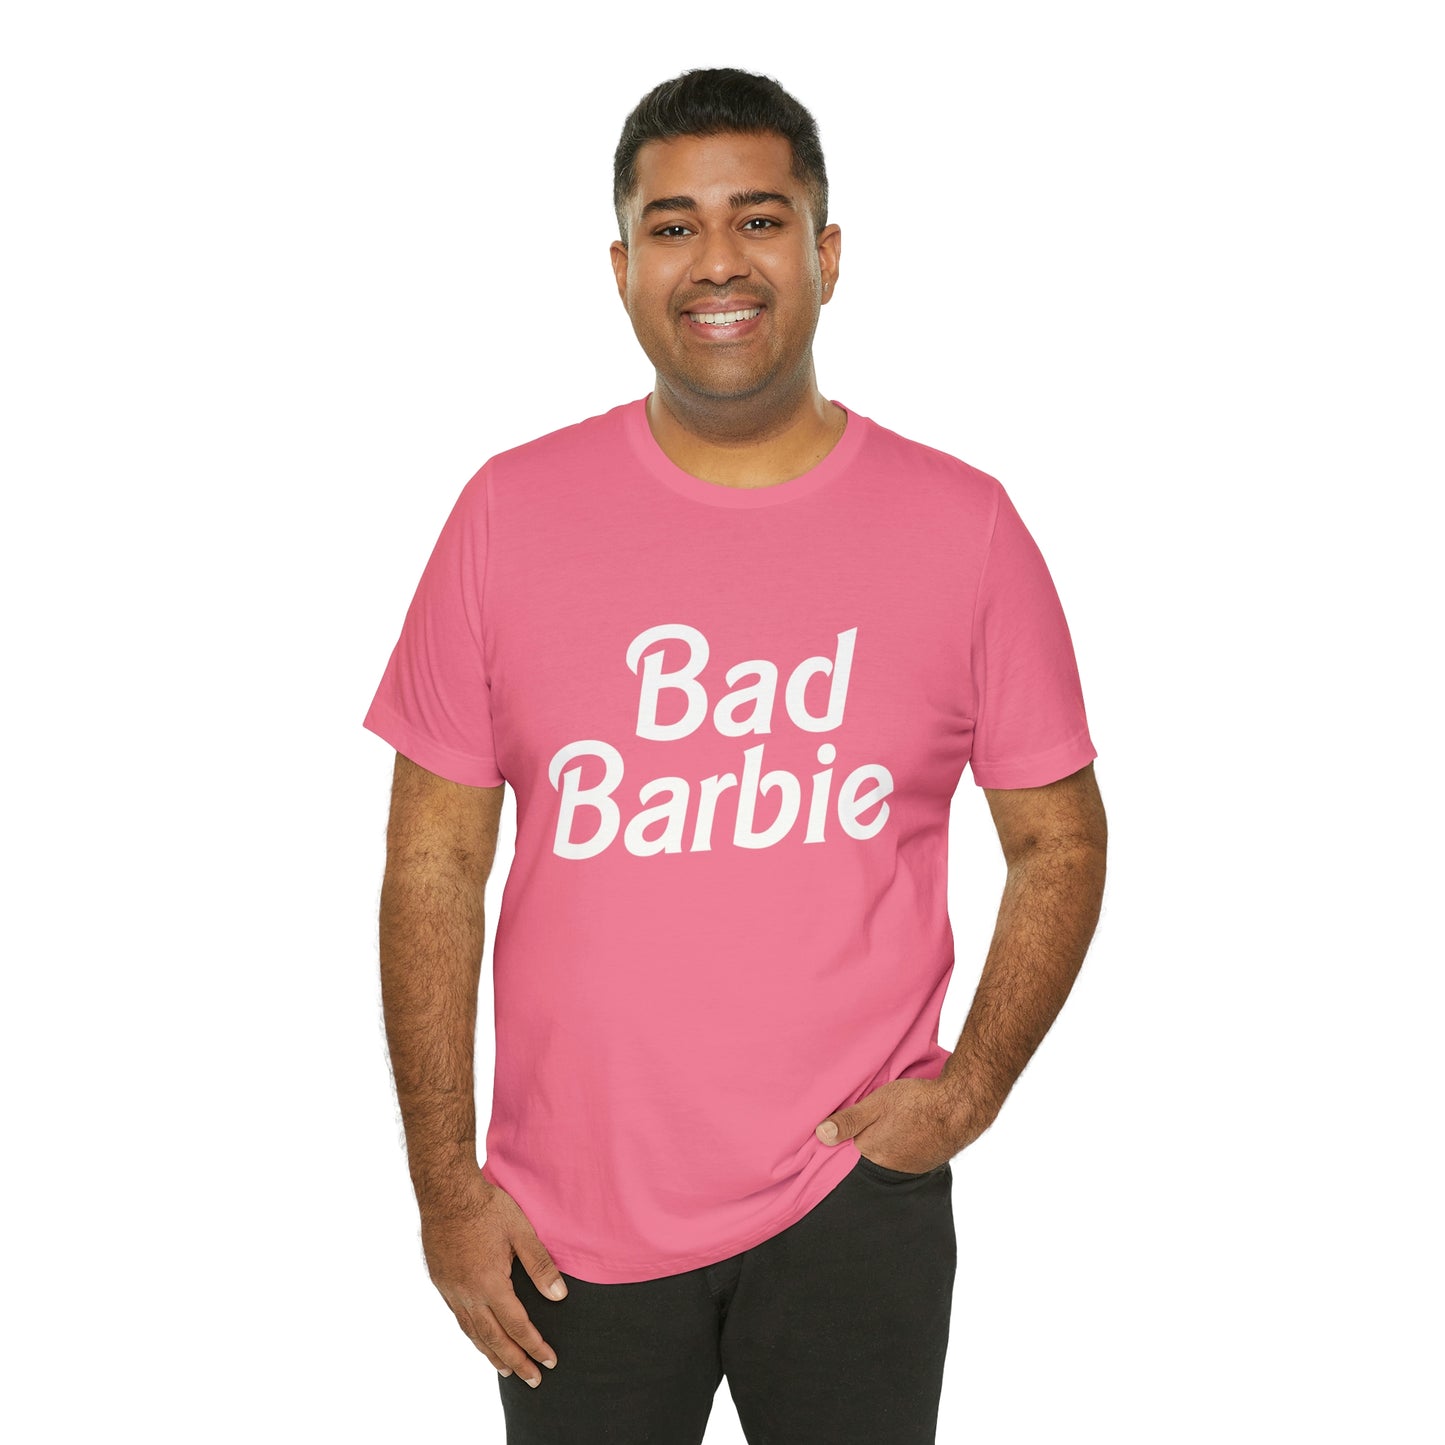 Bad Barbie